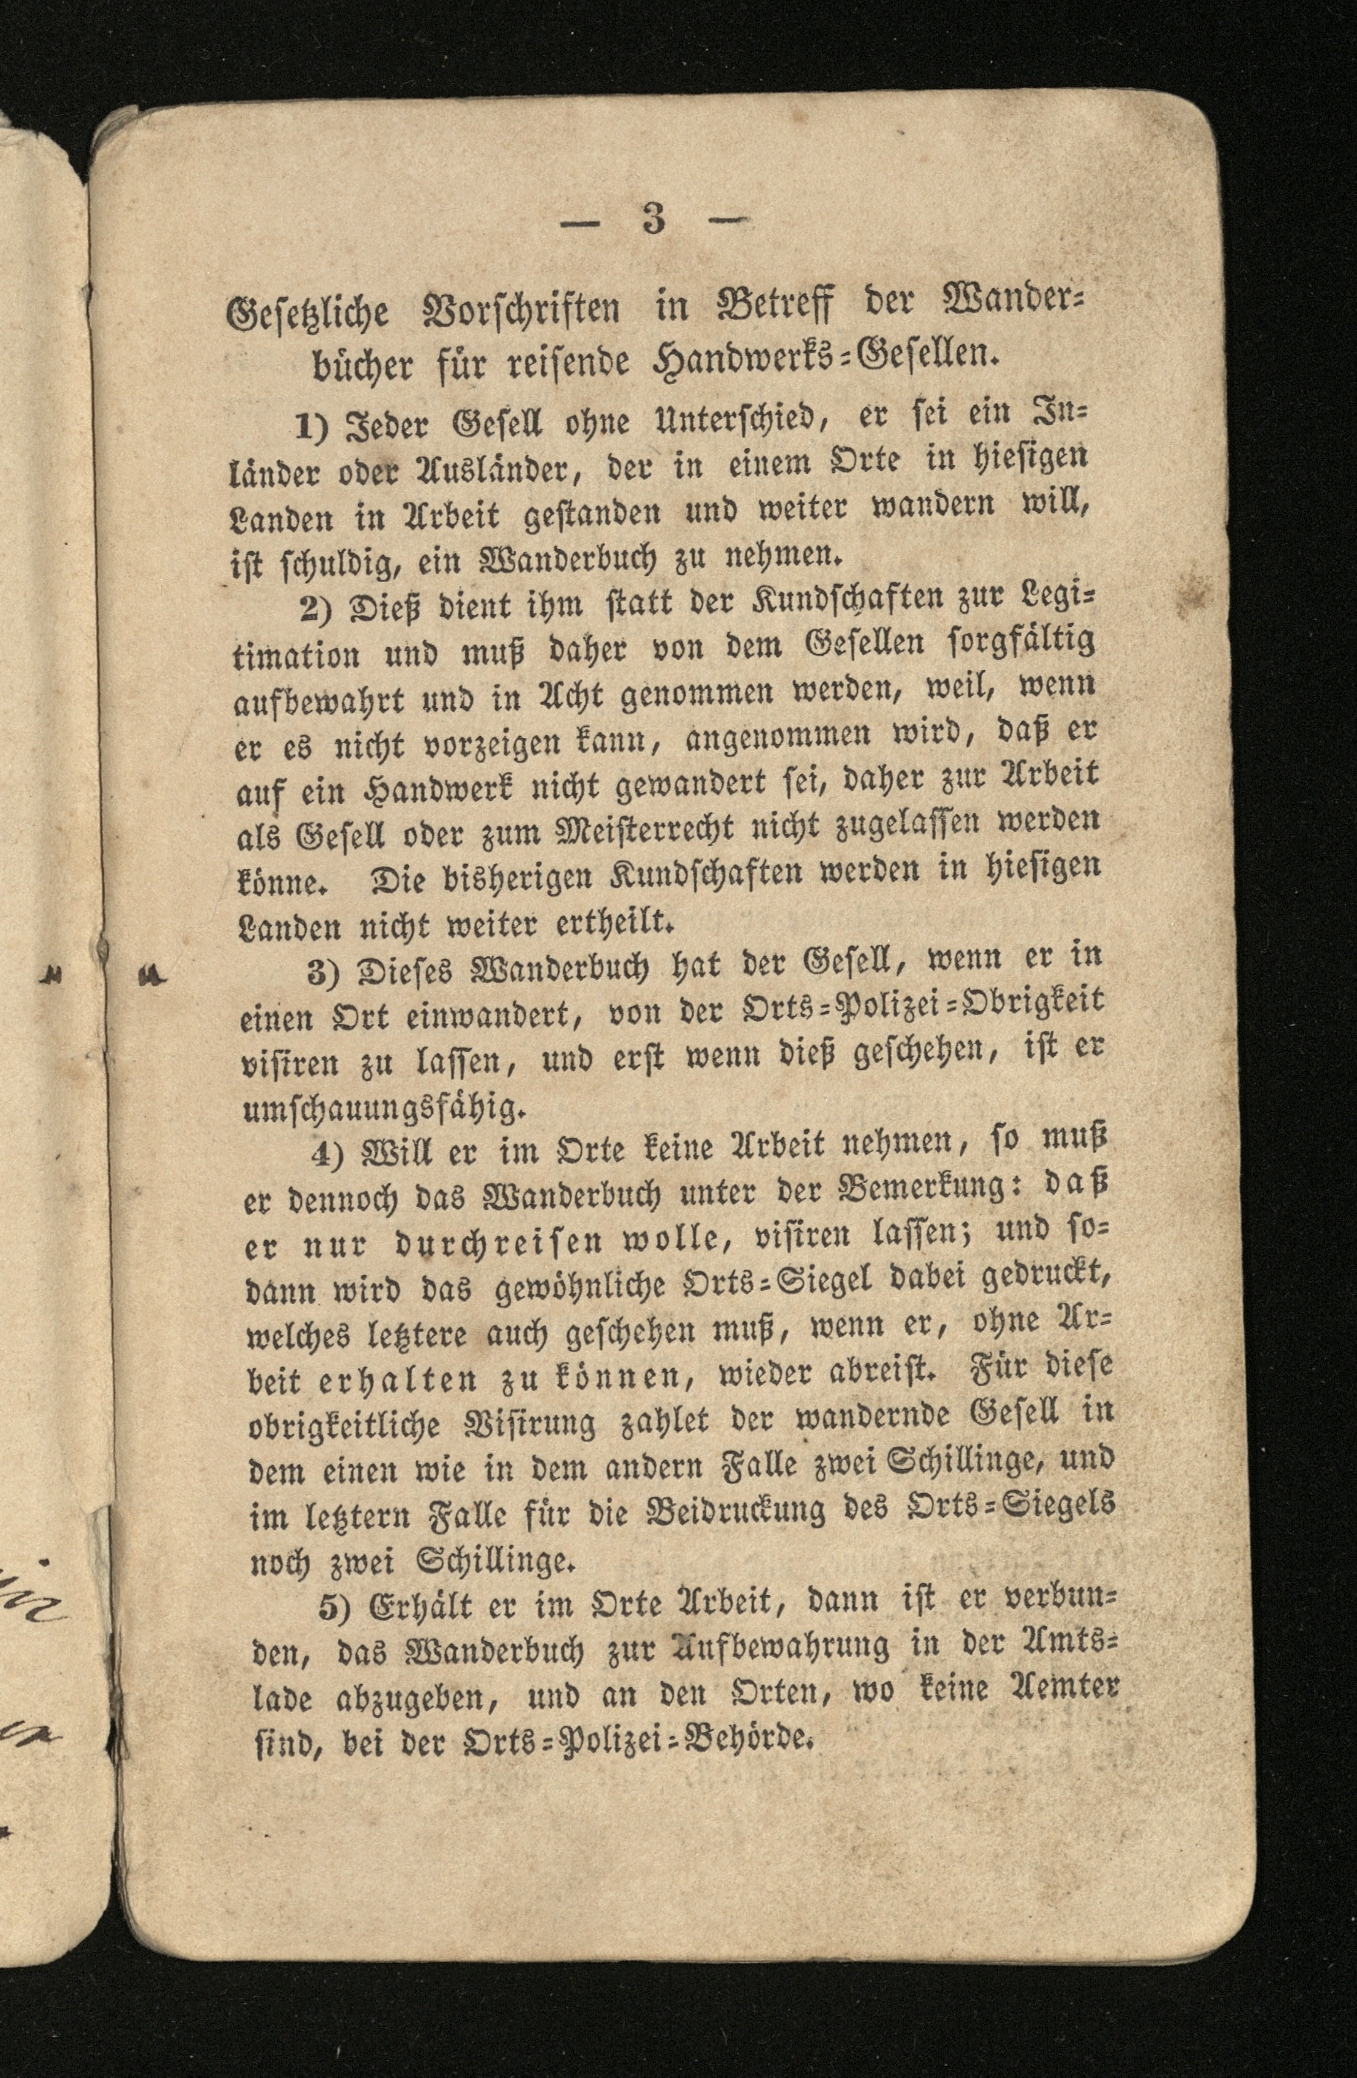 The 'Gesetzliche Vorschriften' (legal regulations) laid out in Busch's Wanderbuch